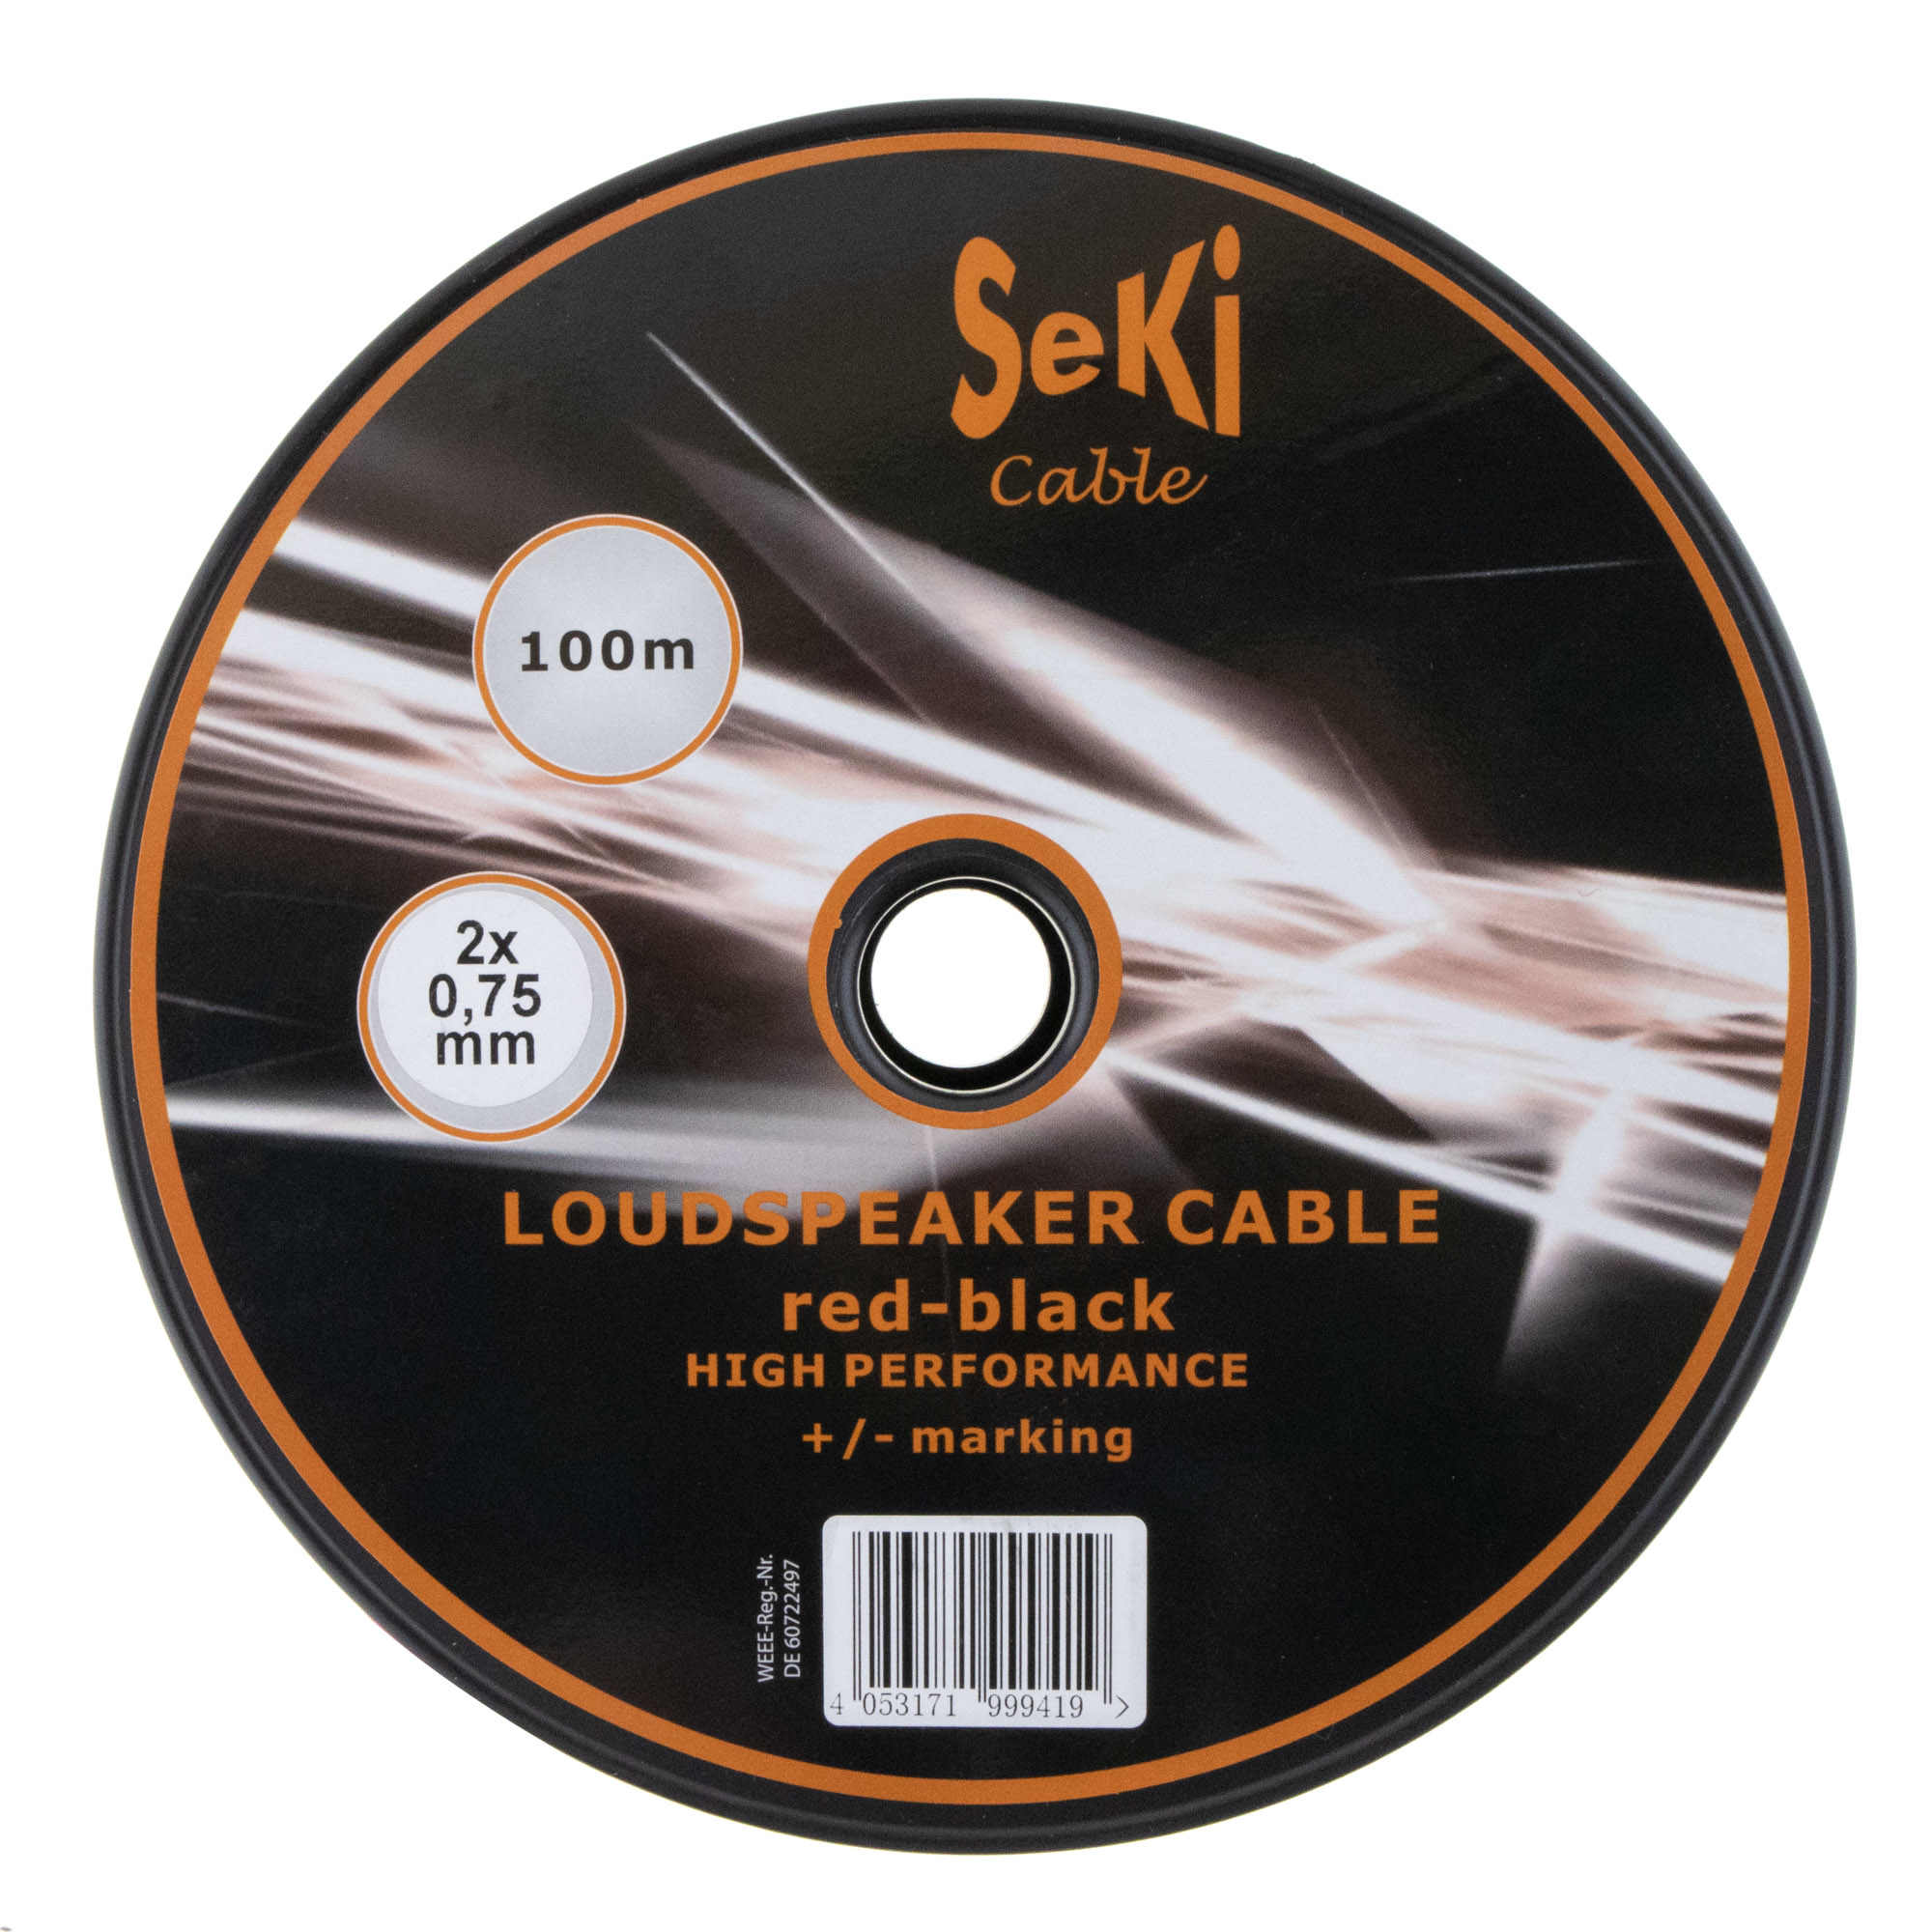 Loudspeaker cable red/black 100m 0.75mm